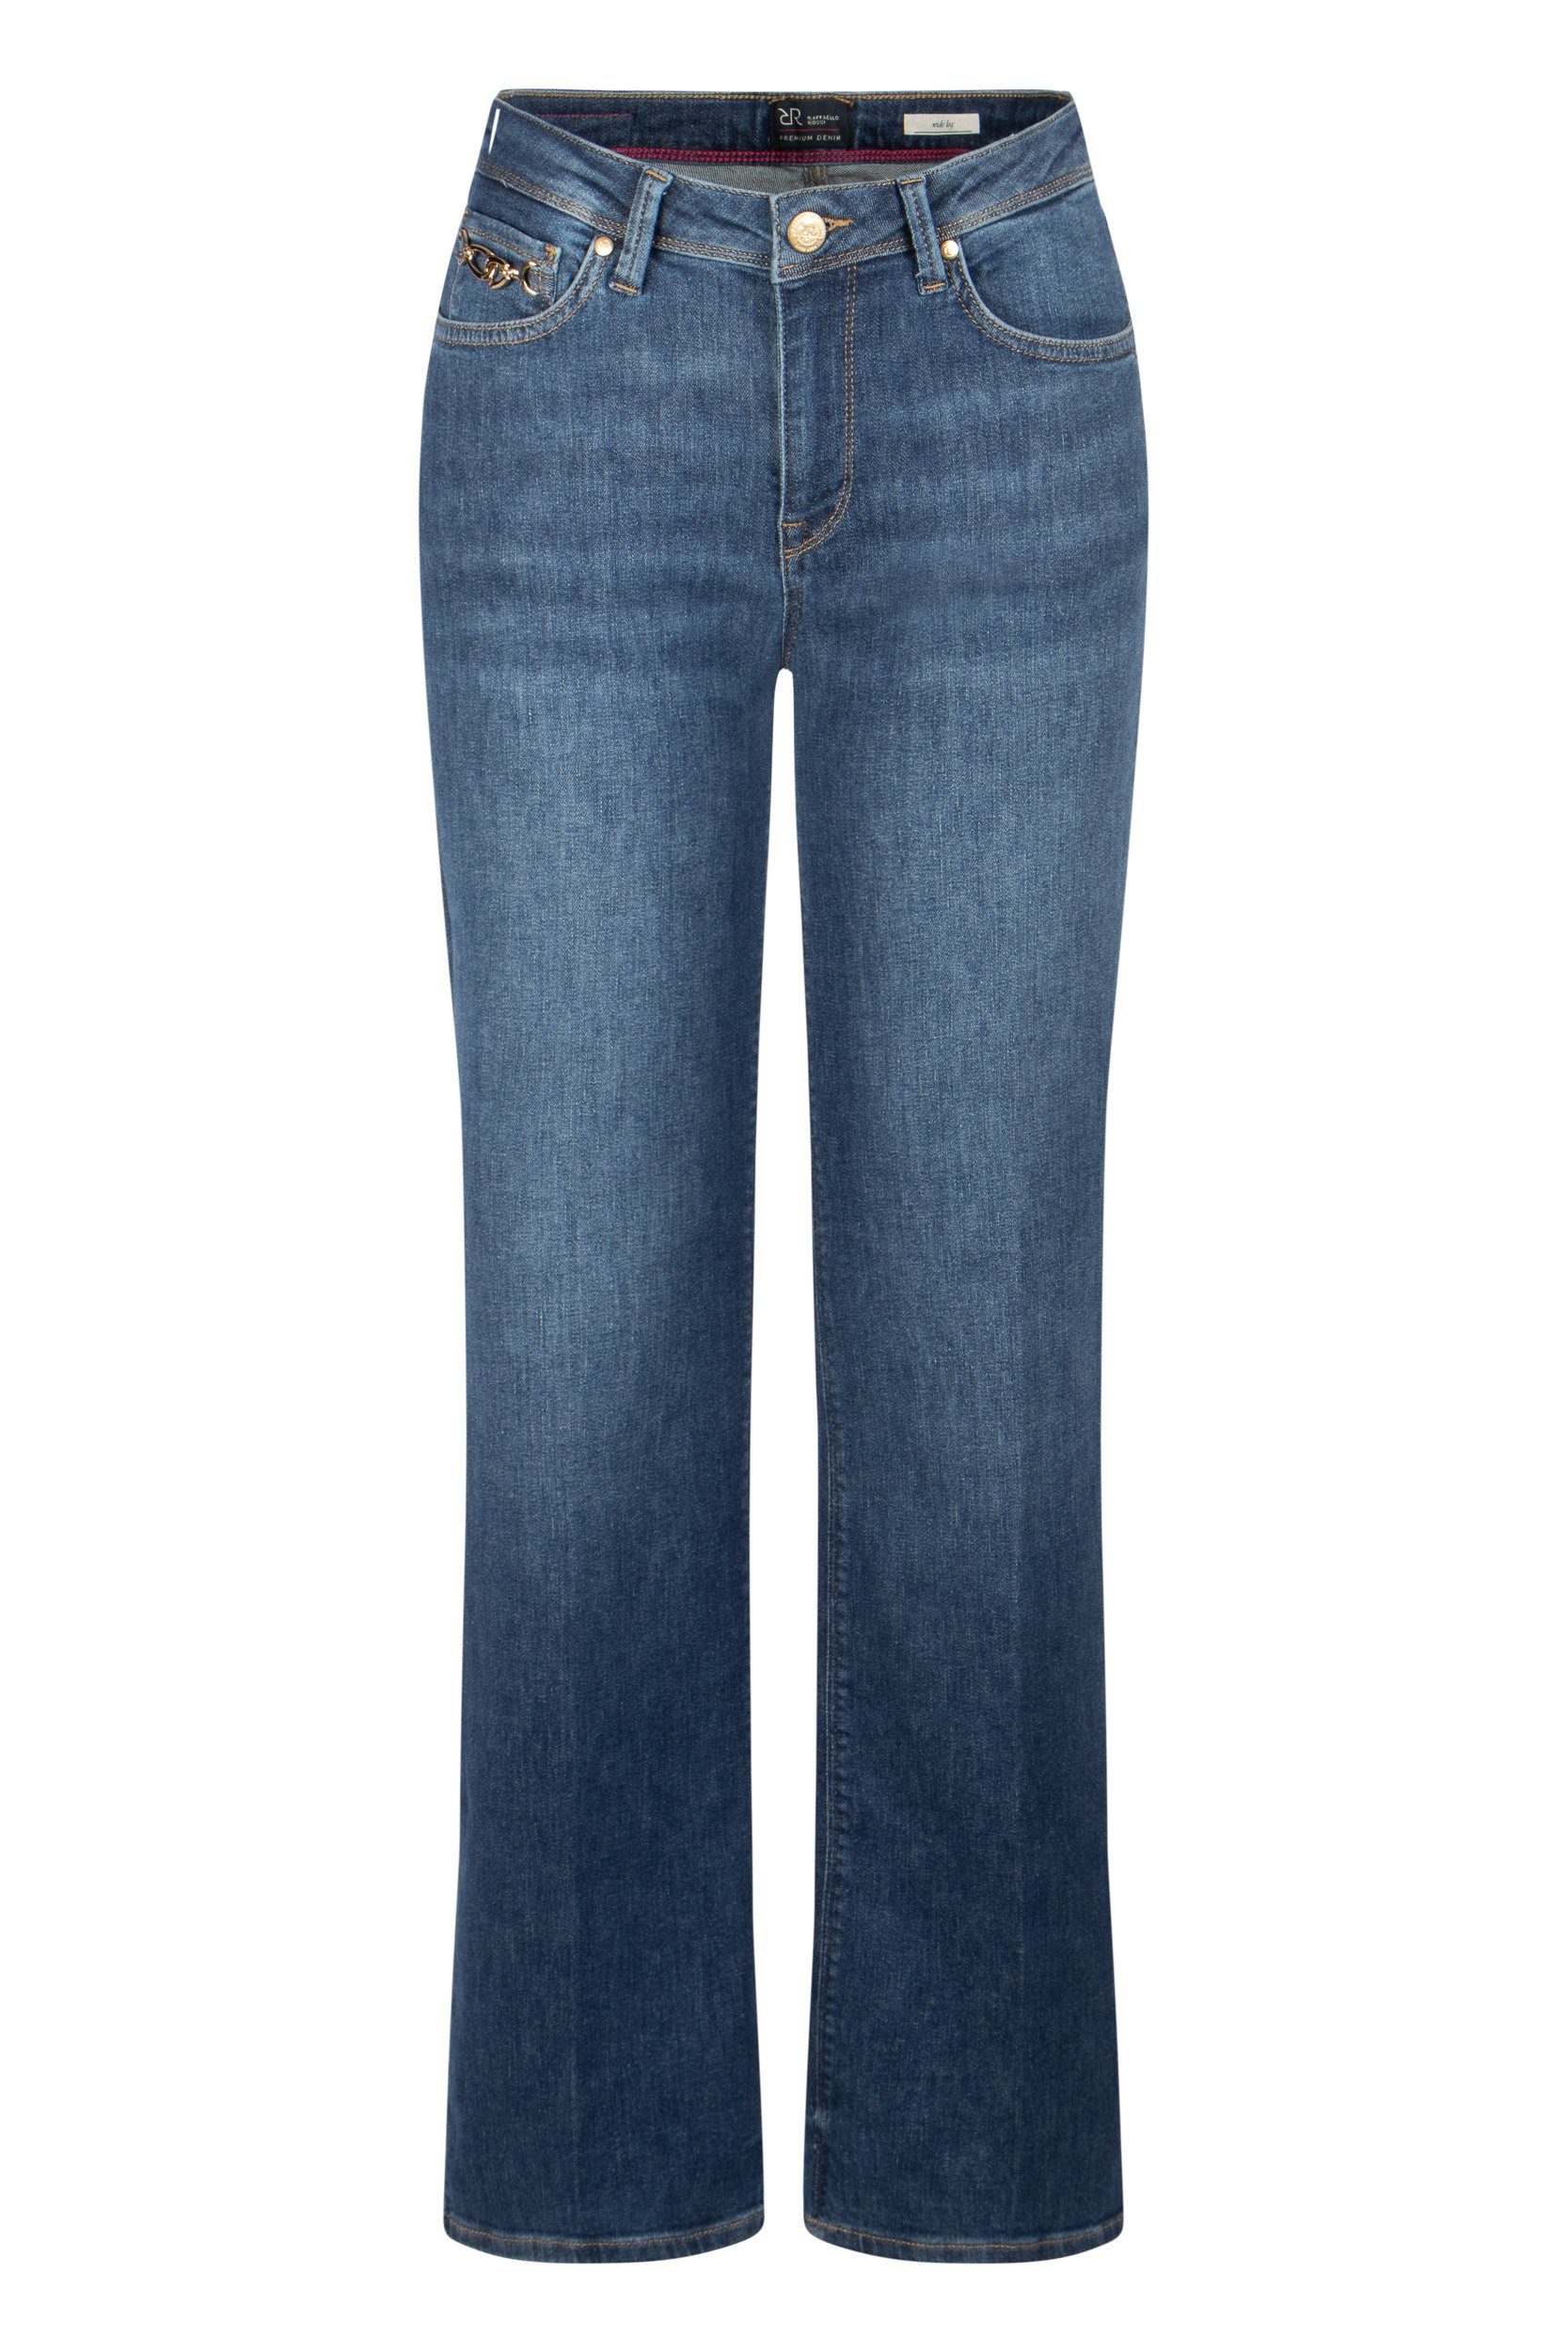 [60 % RABATT auf begrenzte Menge] Raffaello Rossi 5-Pocket-Jeans Long Kira B